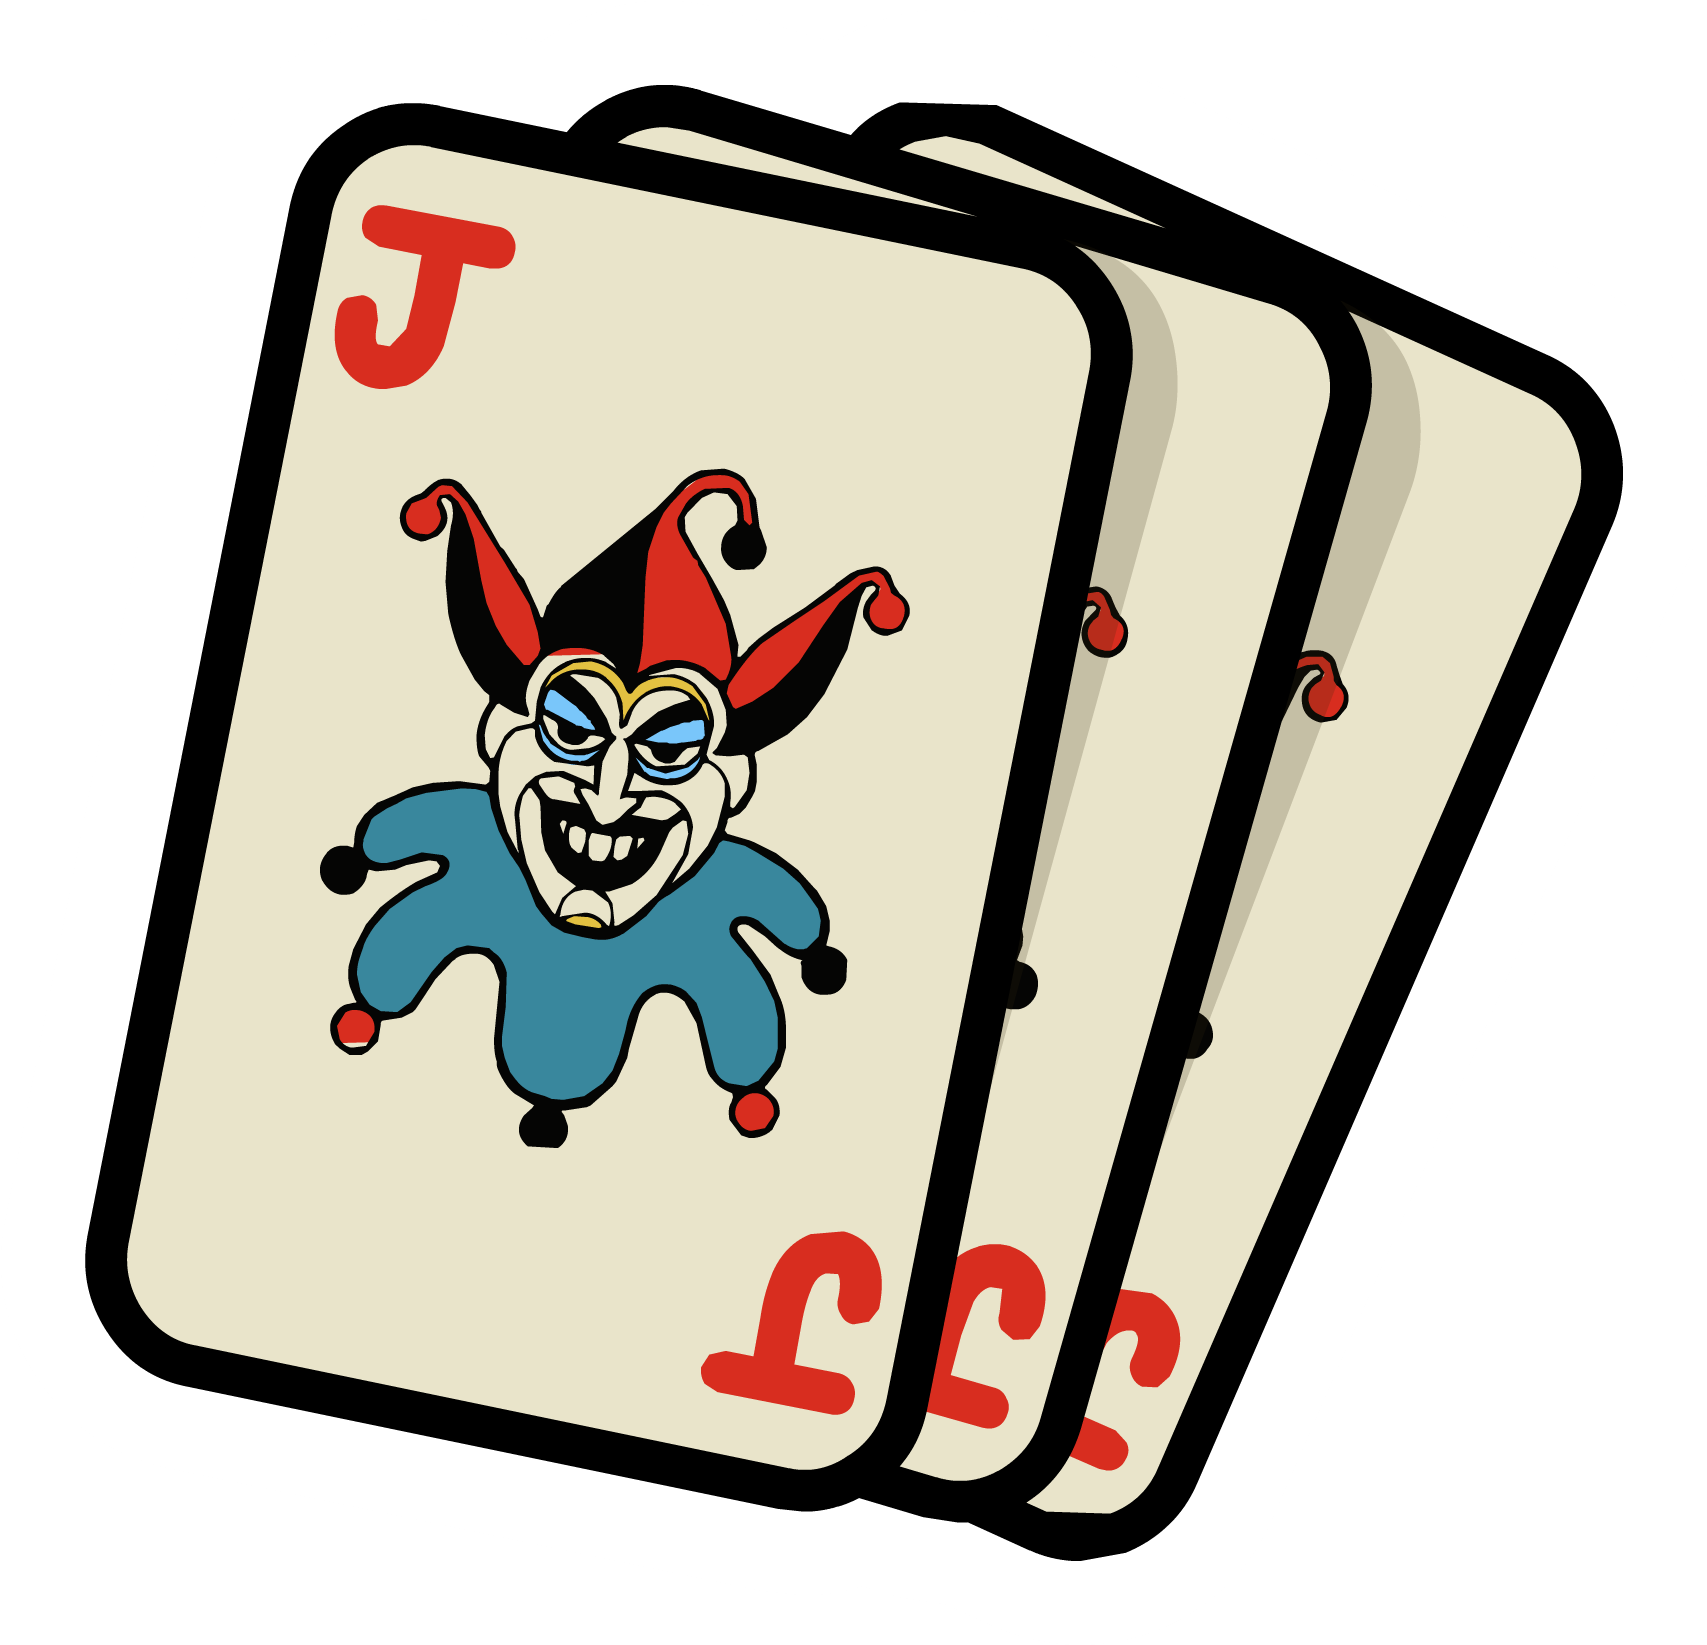 Cartão Joker PNG Pic